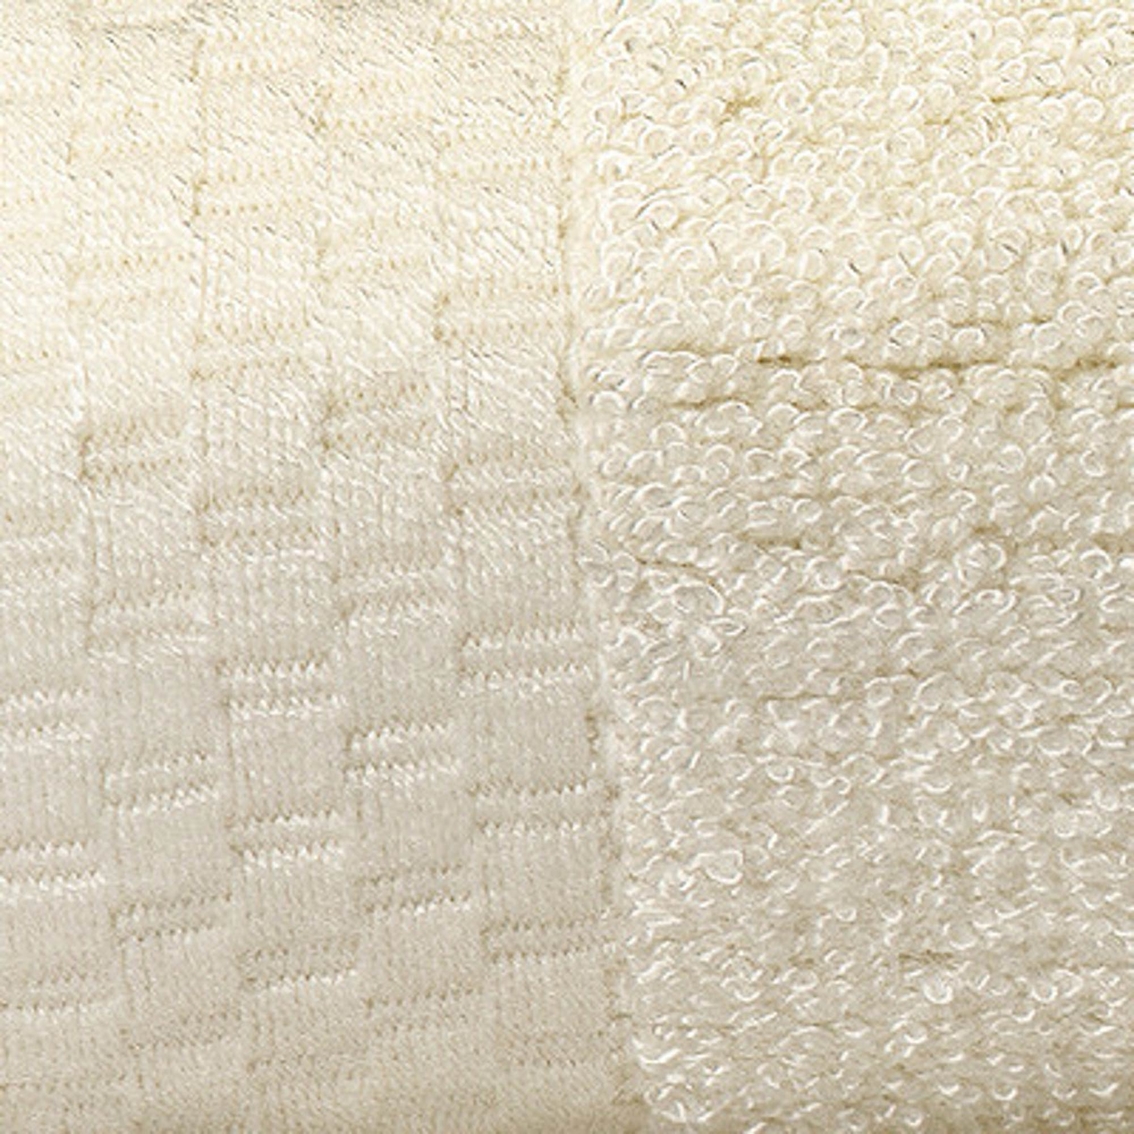 BedVoyage Rayon from Bamboo Resort Bath Towel - Image 2 of 3